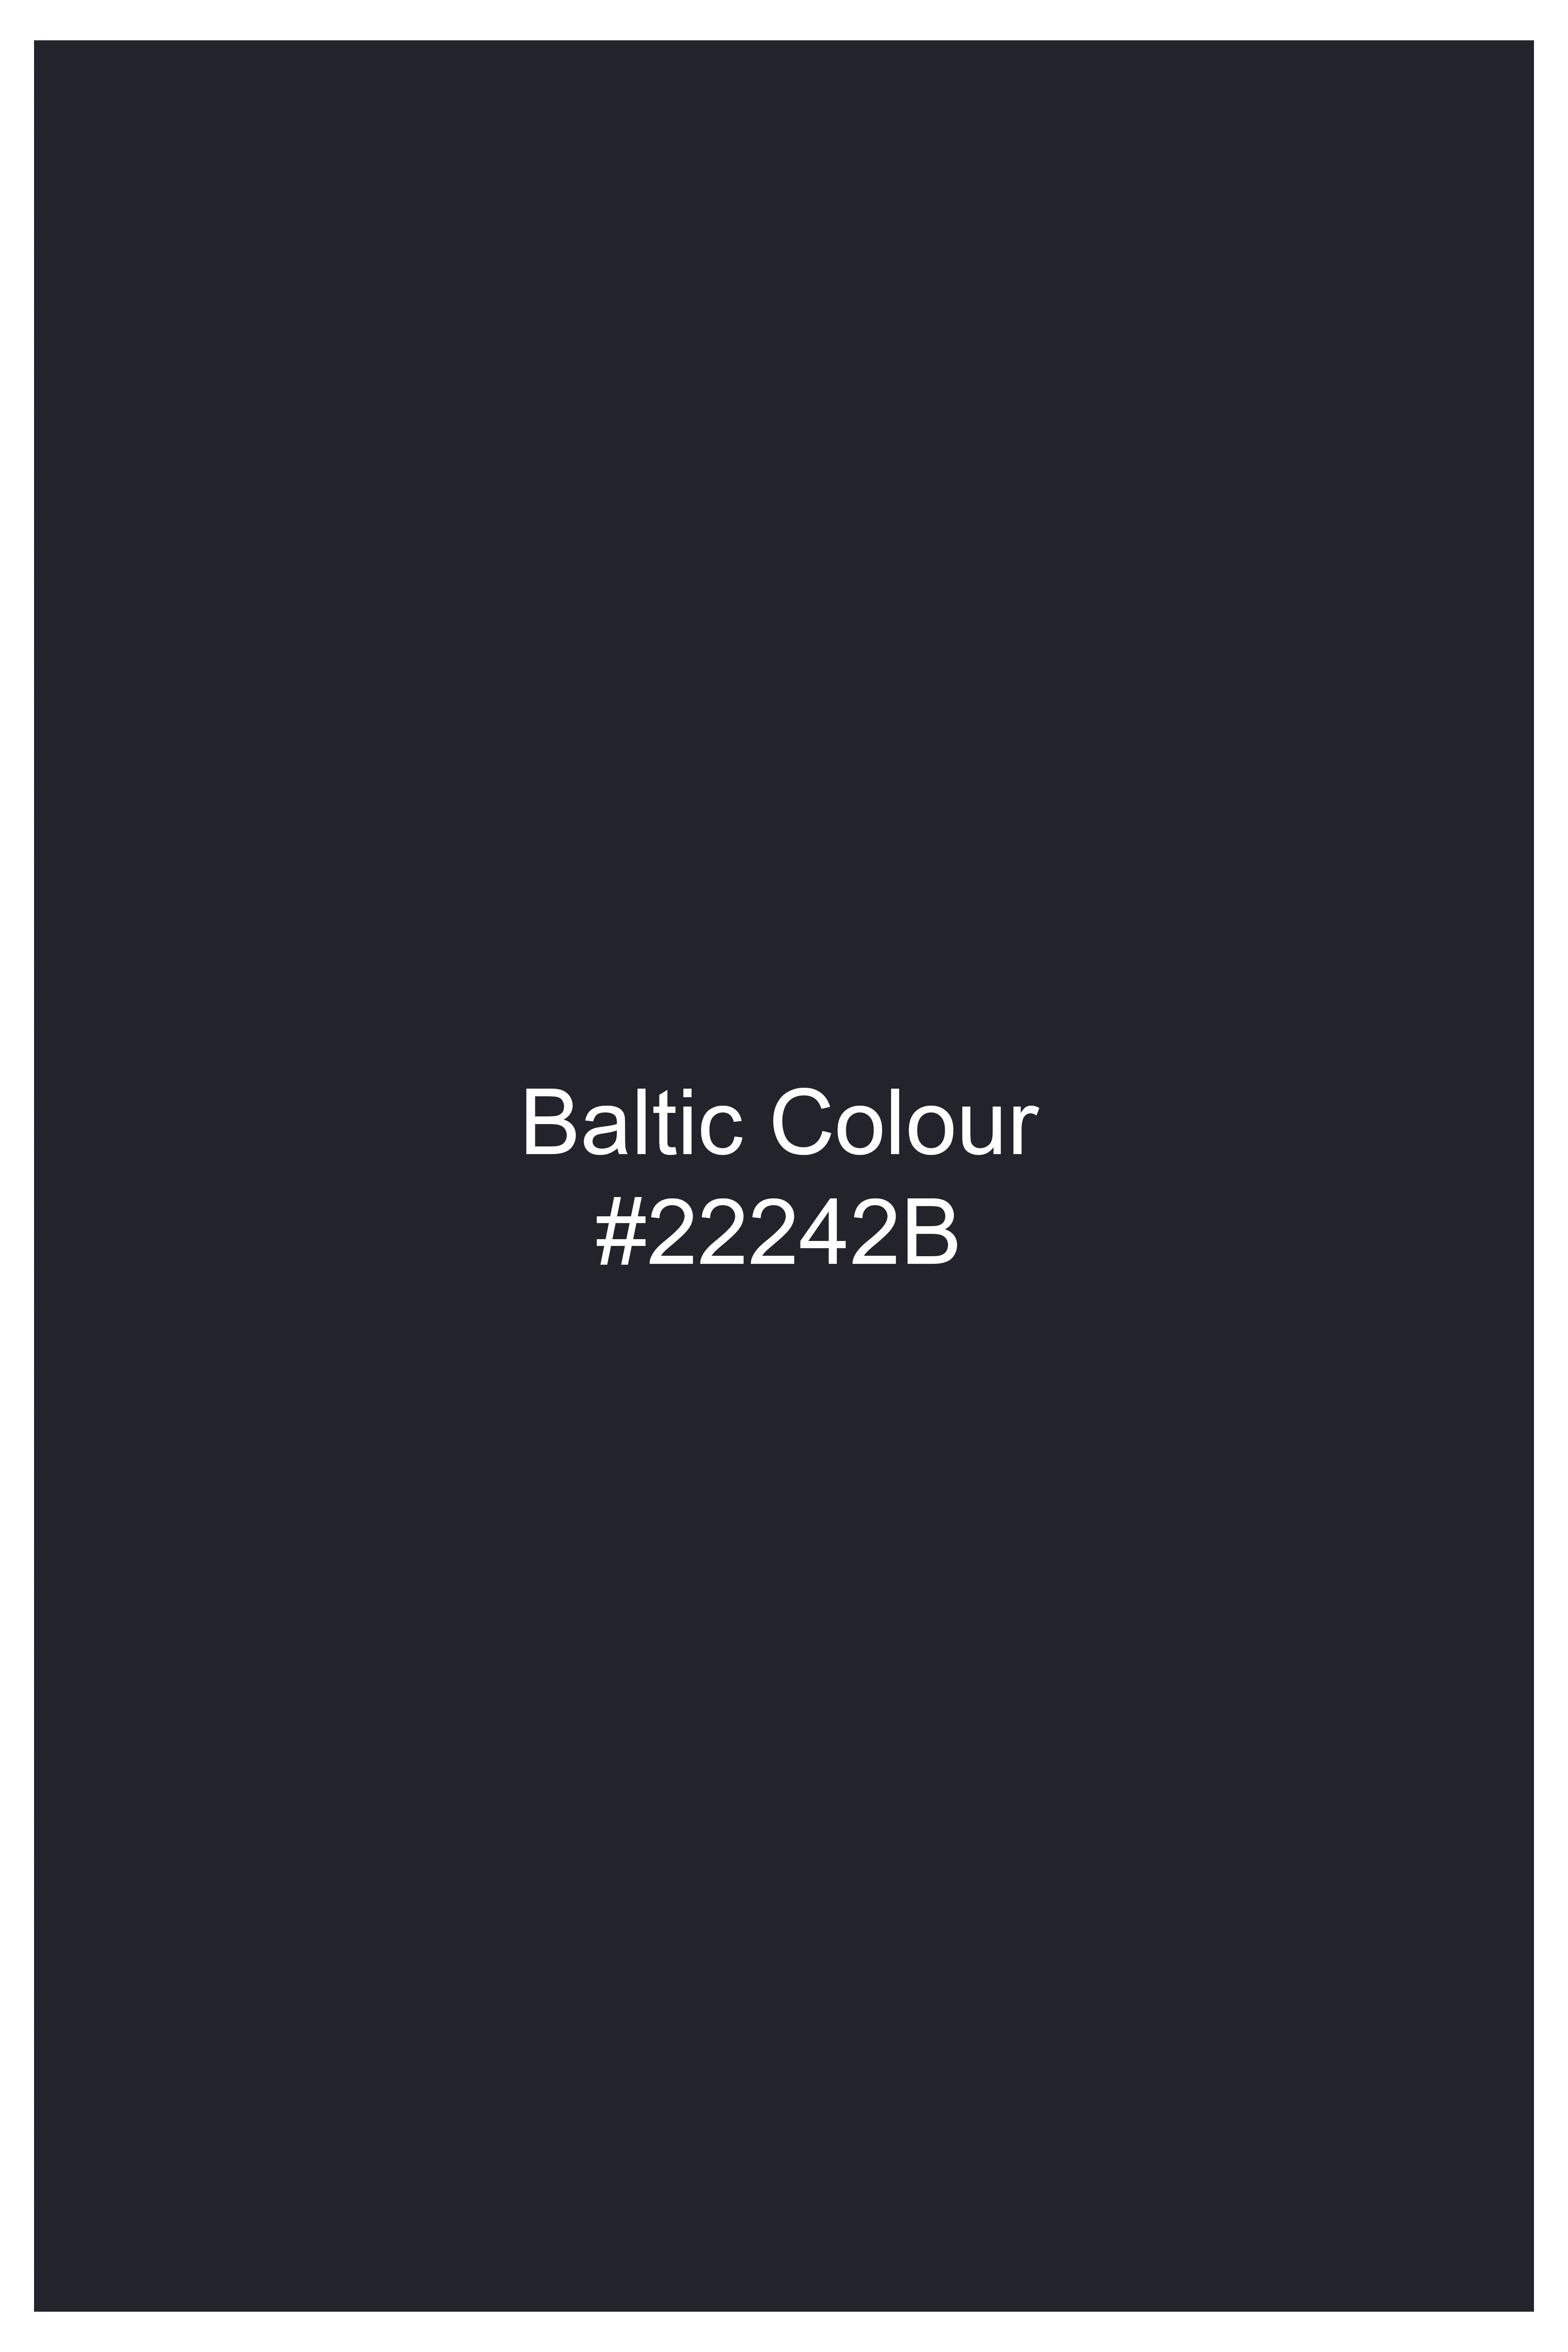 Baltic Blue Subtle Checkered Cross Buttoned Bandhgala Wool Rich Suit ST3098-CBG-36, ST3098-CBG-38, ST3098-CBG-40, ST3098-CBG-42, ST3098-CBG-44, ST3098-CBG-46, ST3098-CBG-48, ST3098-CBG-50, ST3098-CBG-52, ST3098-CBG-54, ST3098-CBG-56, ST3098-CBG-58, ST3098-CBG-60